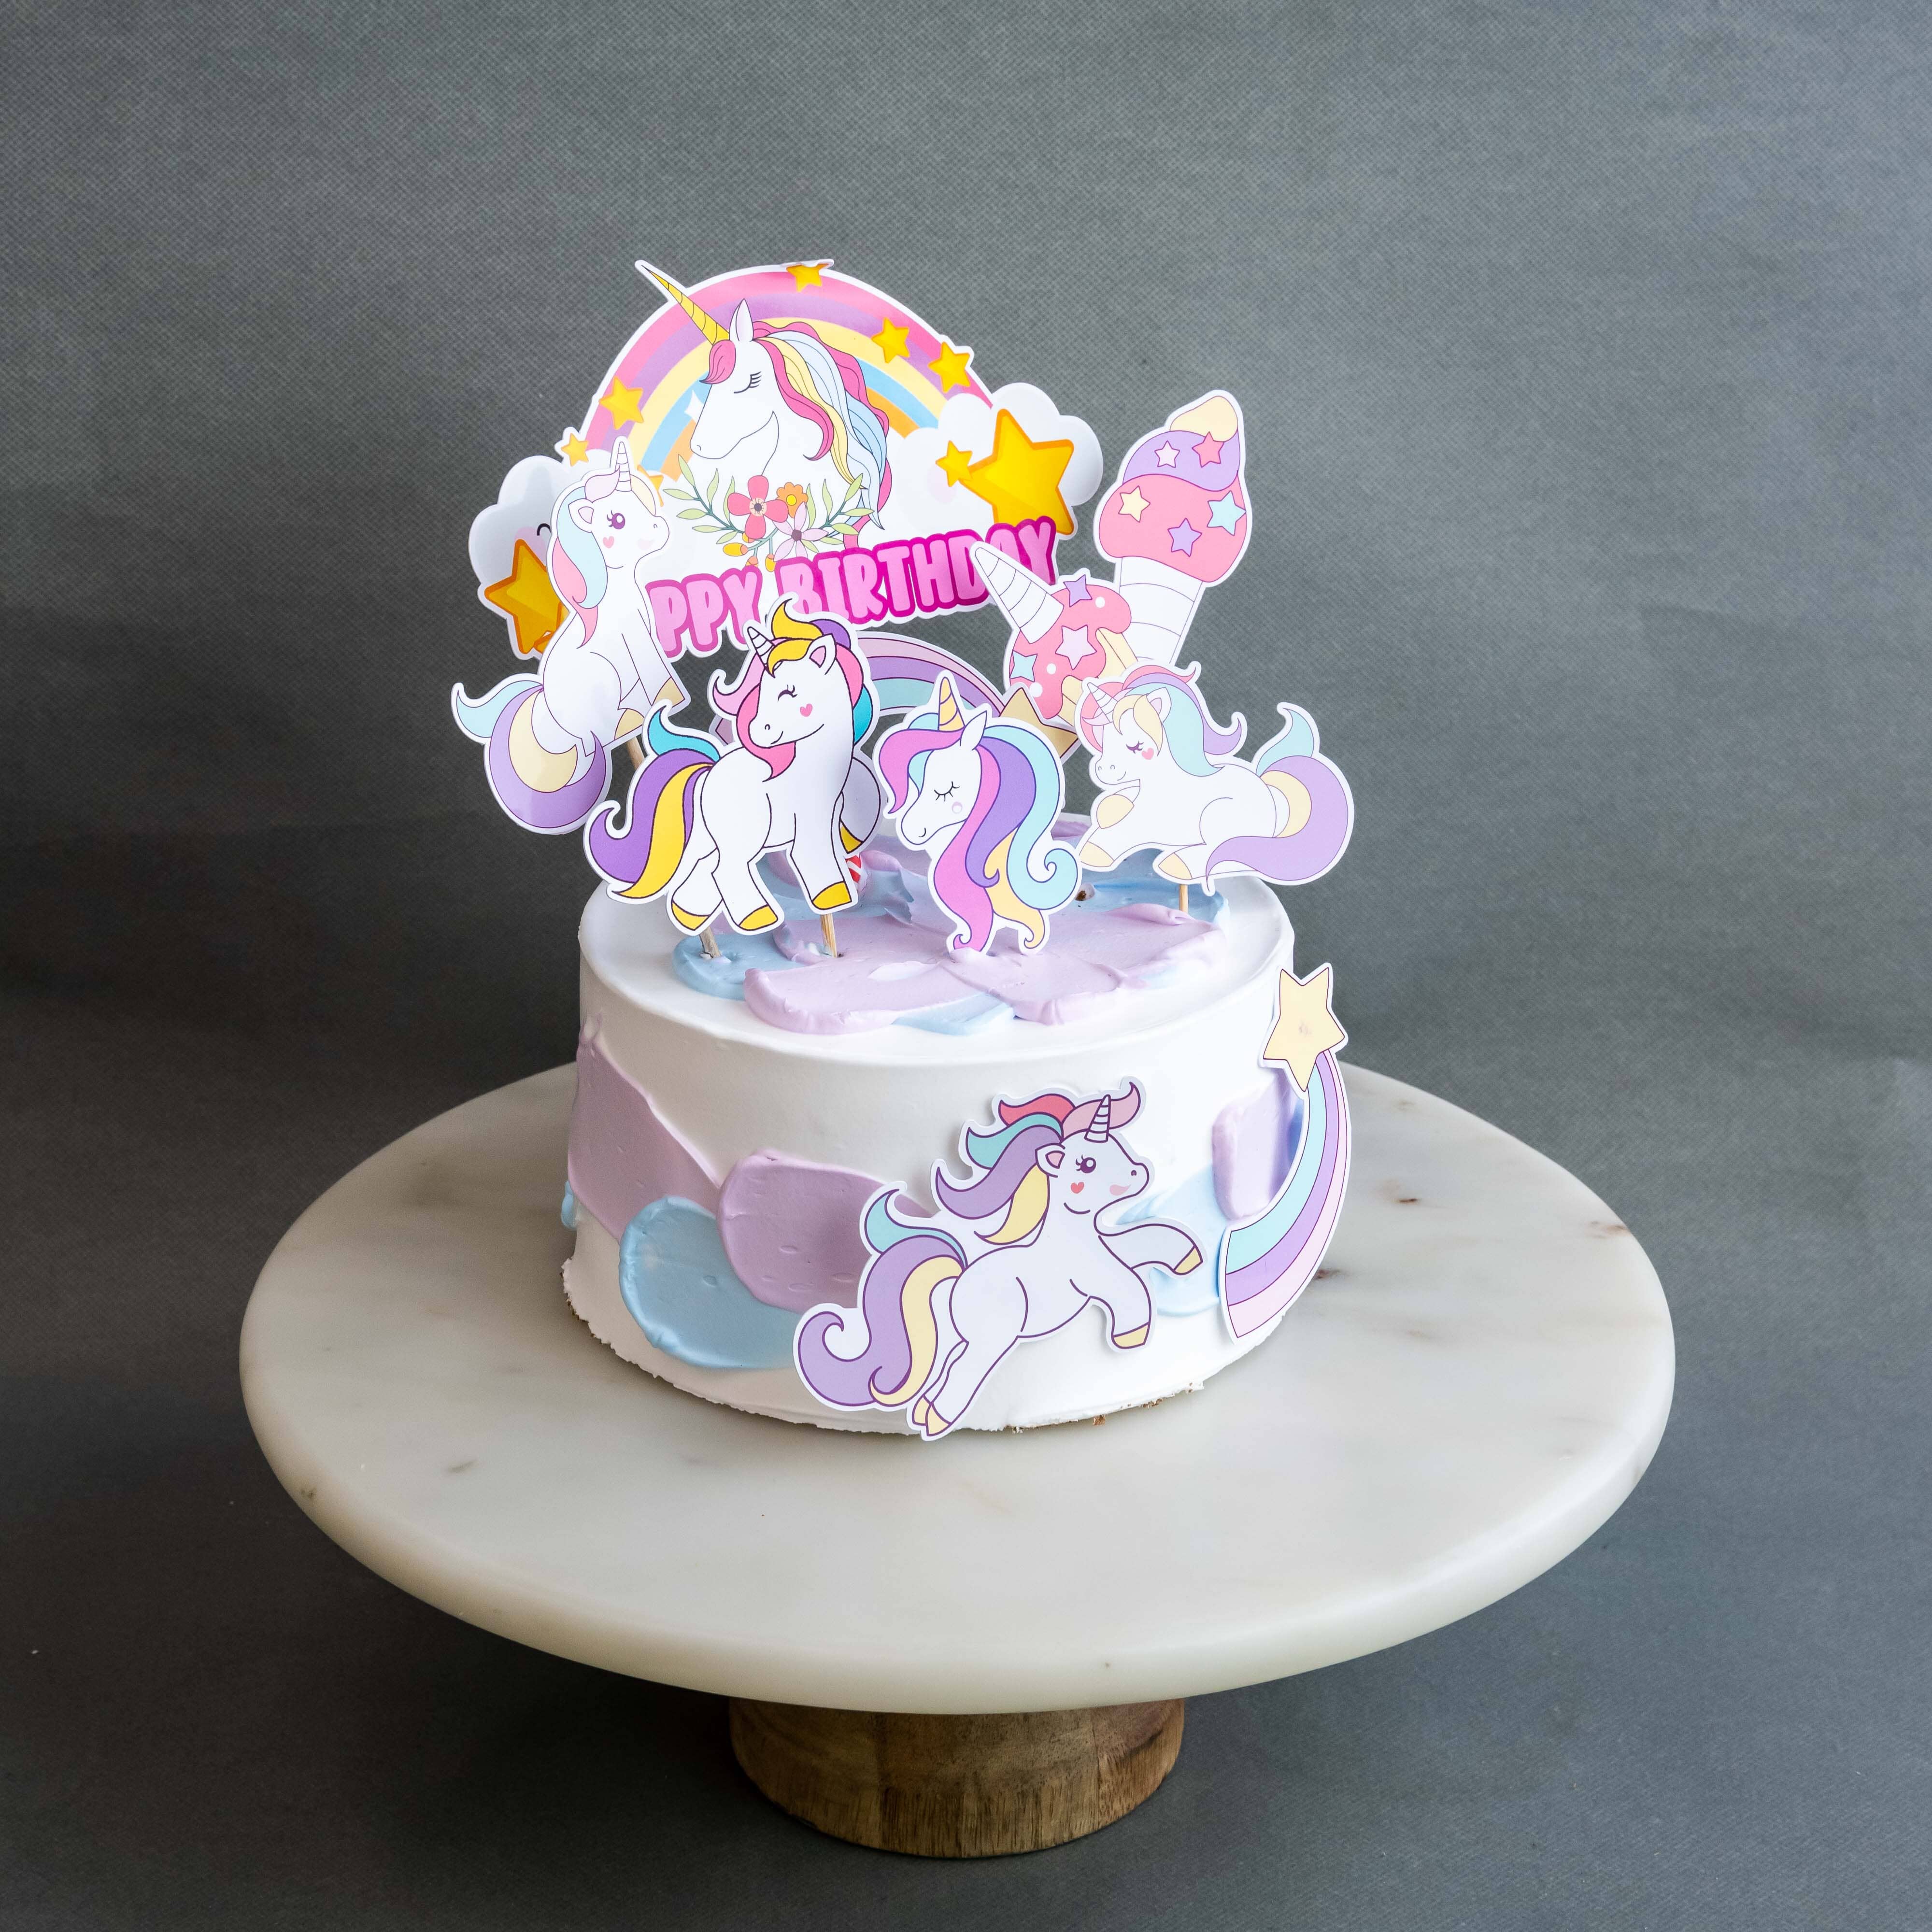 15 Most Amazing Unicorn Birthday Cakes - Parental Journey